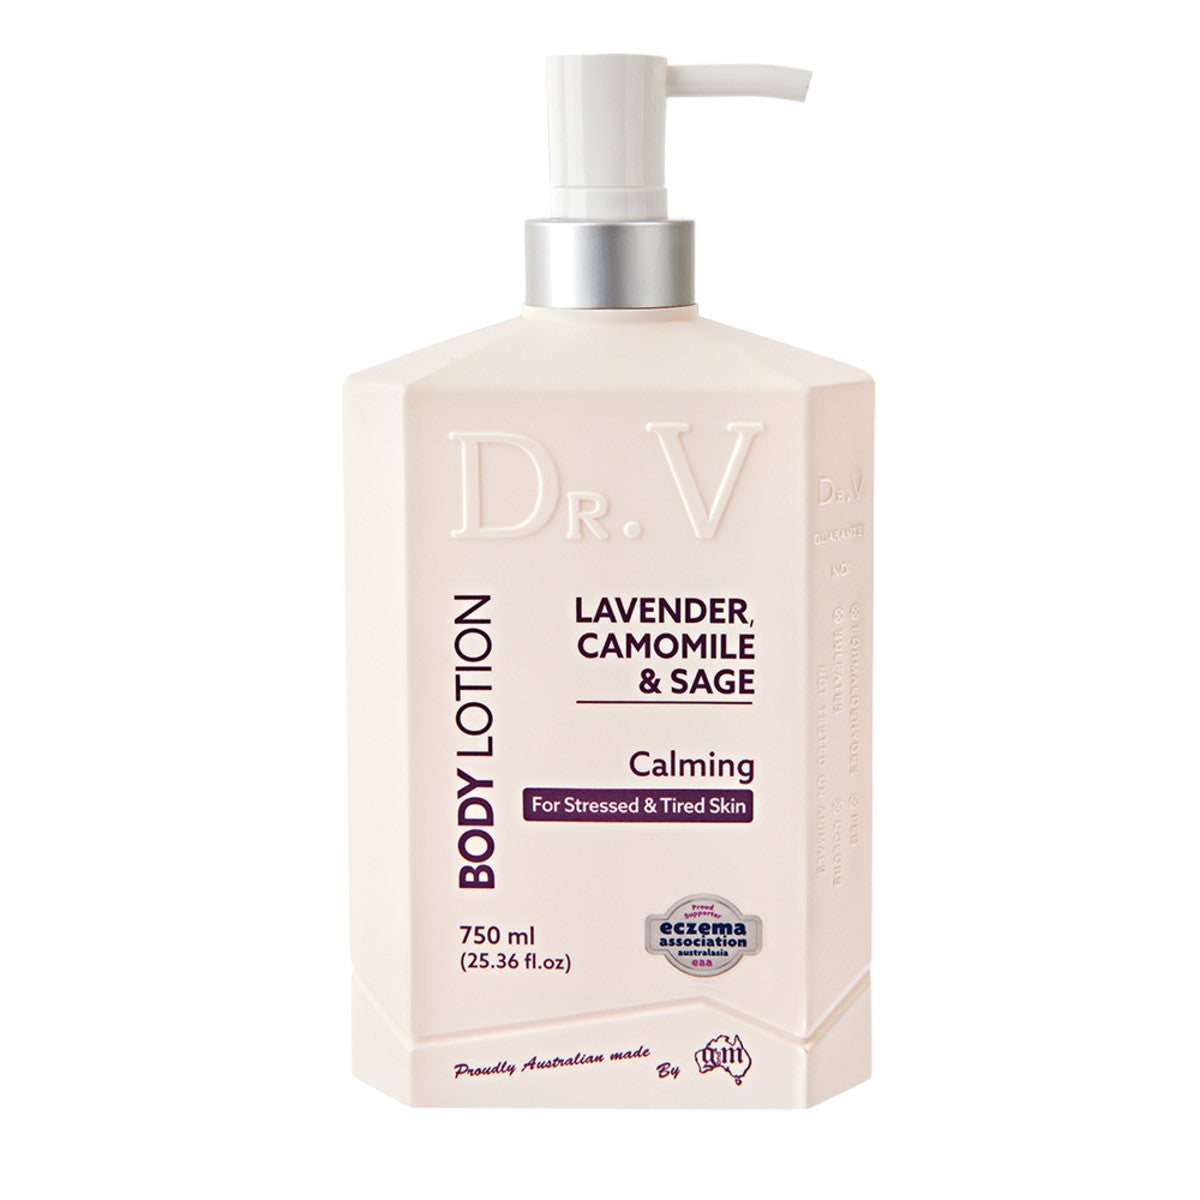 Dr. V - Body Lotion Lavender, Camomile and Sage